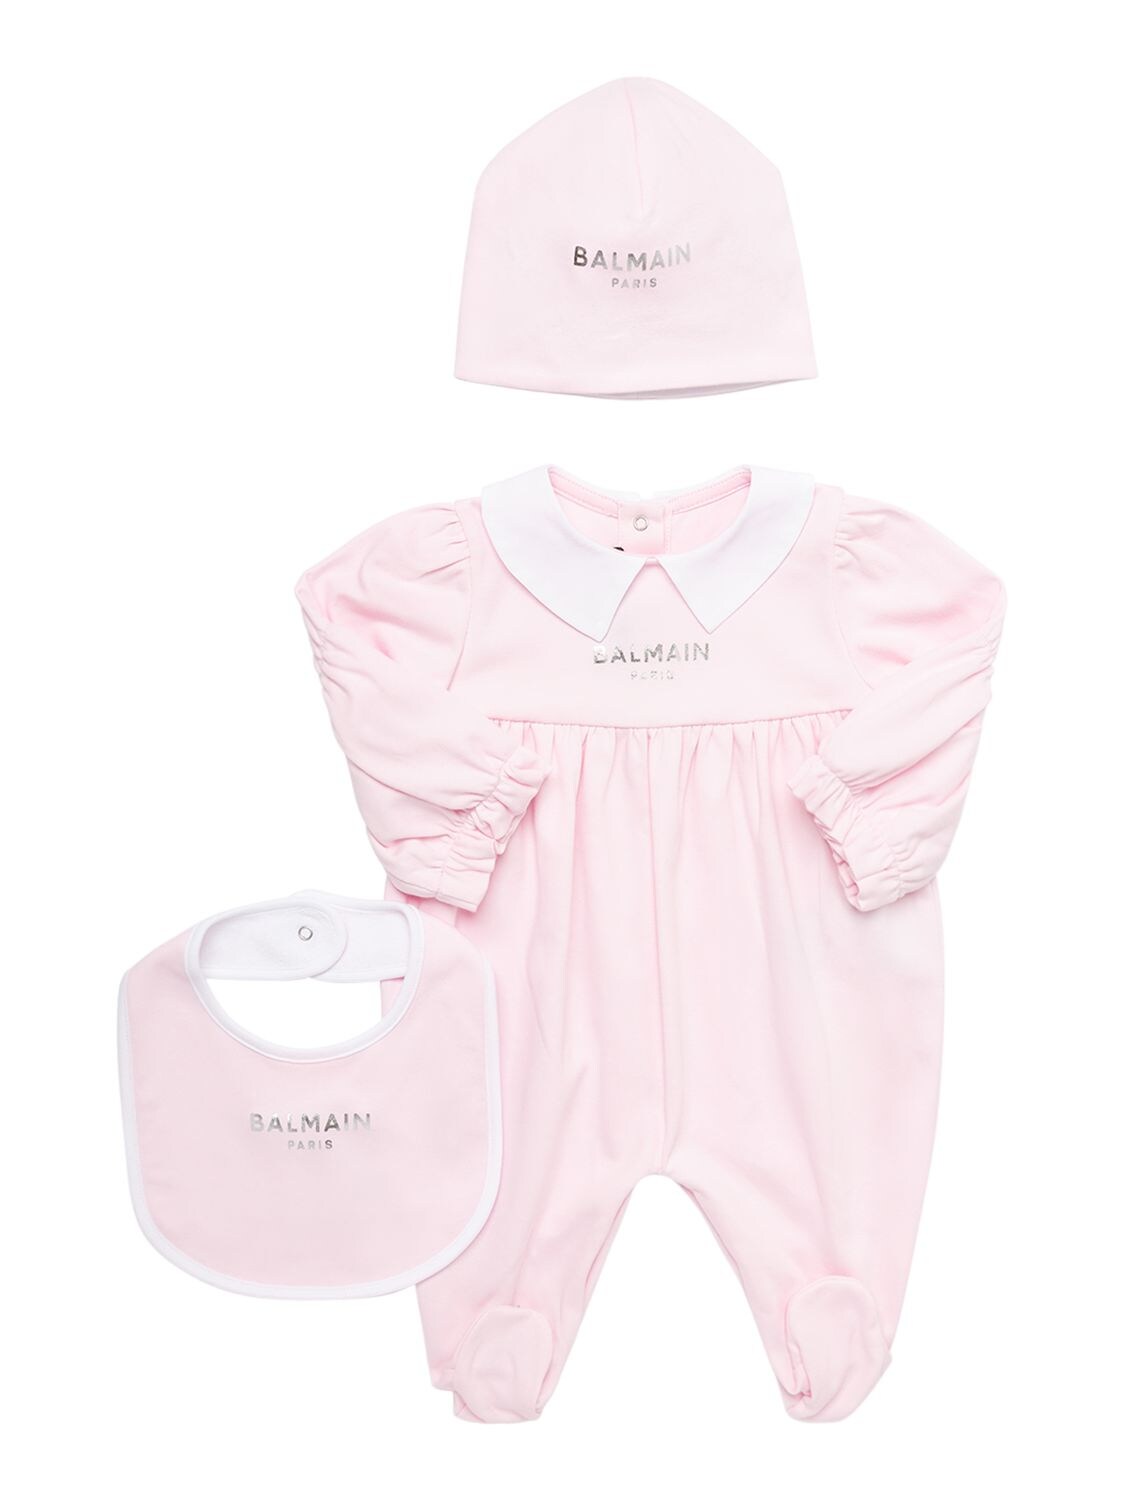 Balmain Babies' Organic Cotton Jersey Romper, Hat & Bib In Pink